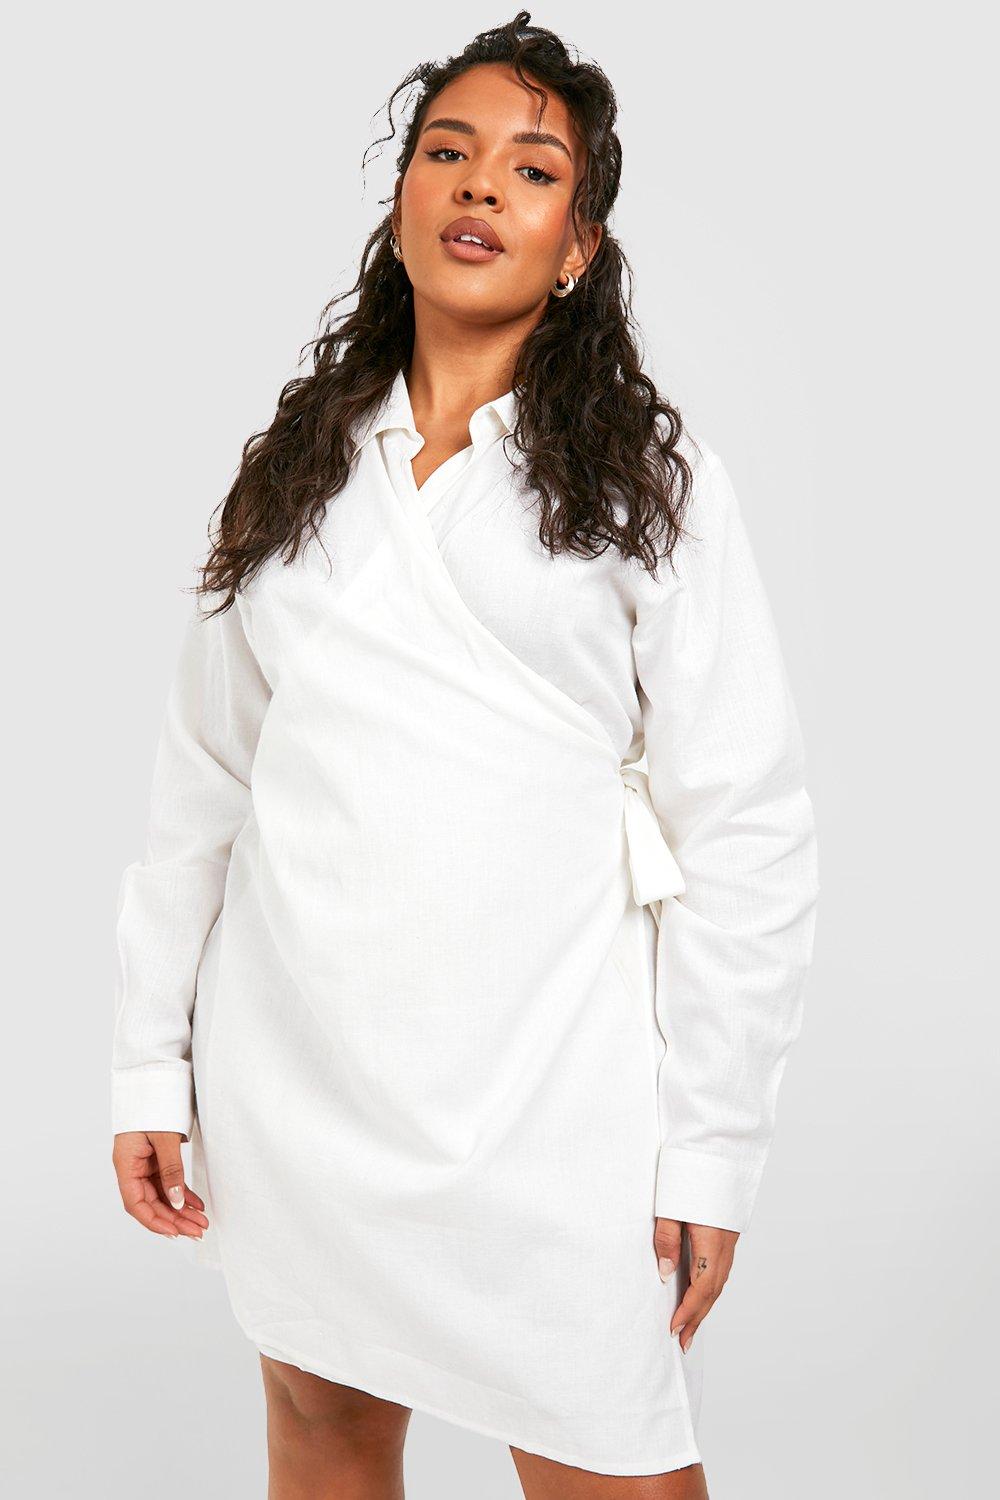 Plus Size White Button Down Shirt Dress | tunersread.com